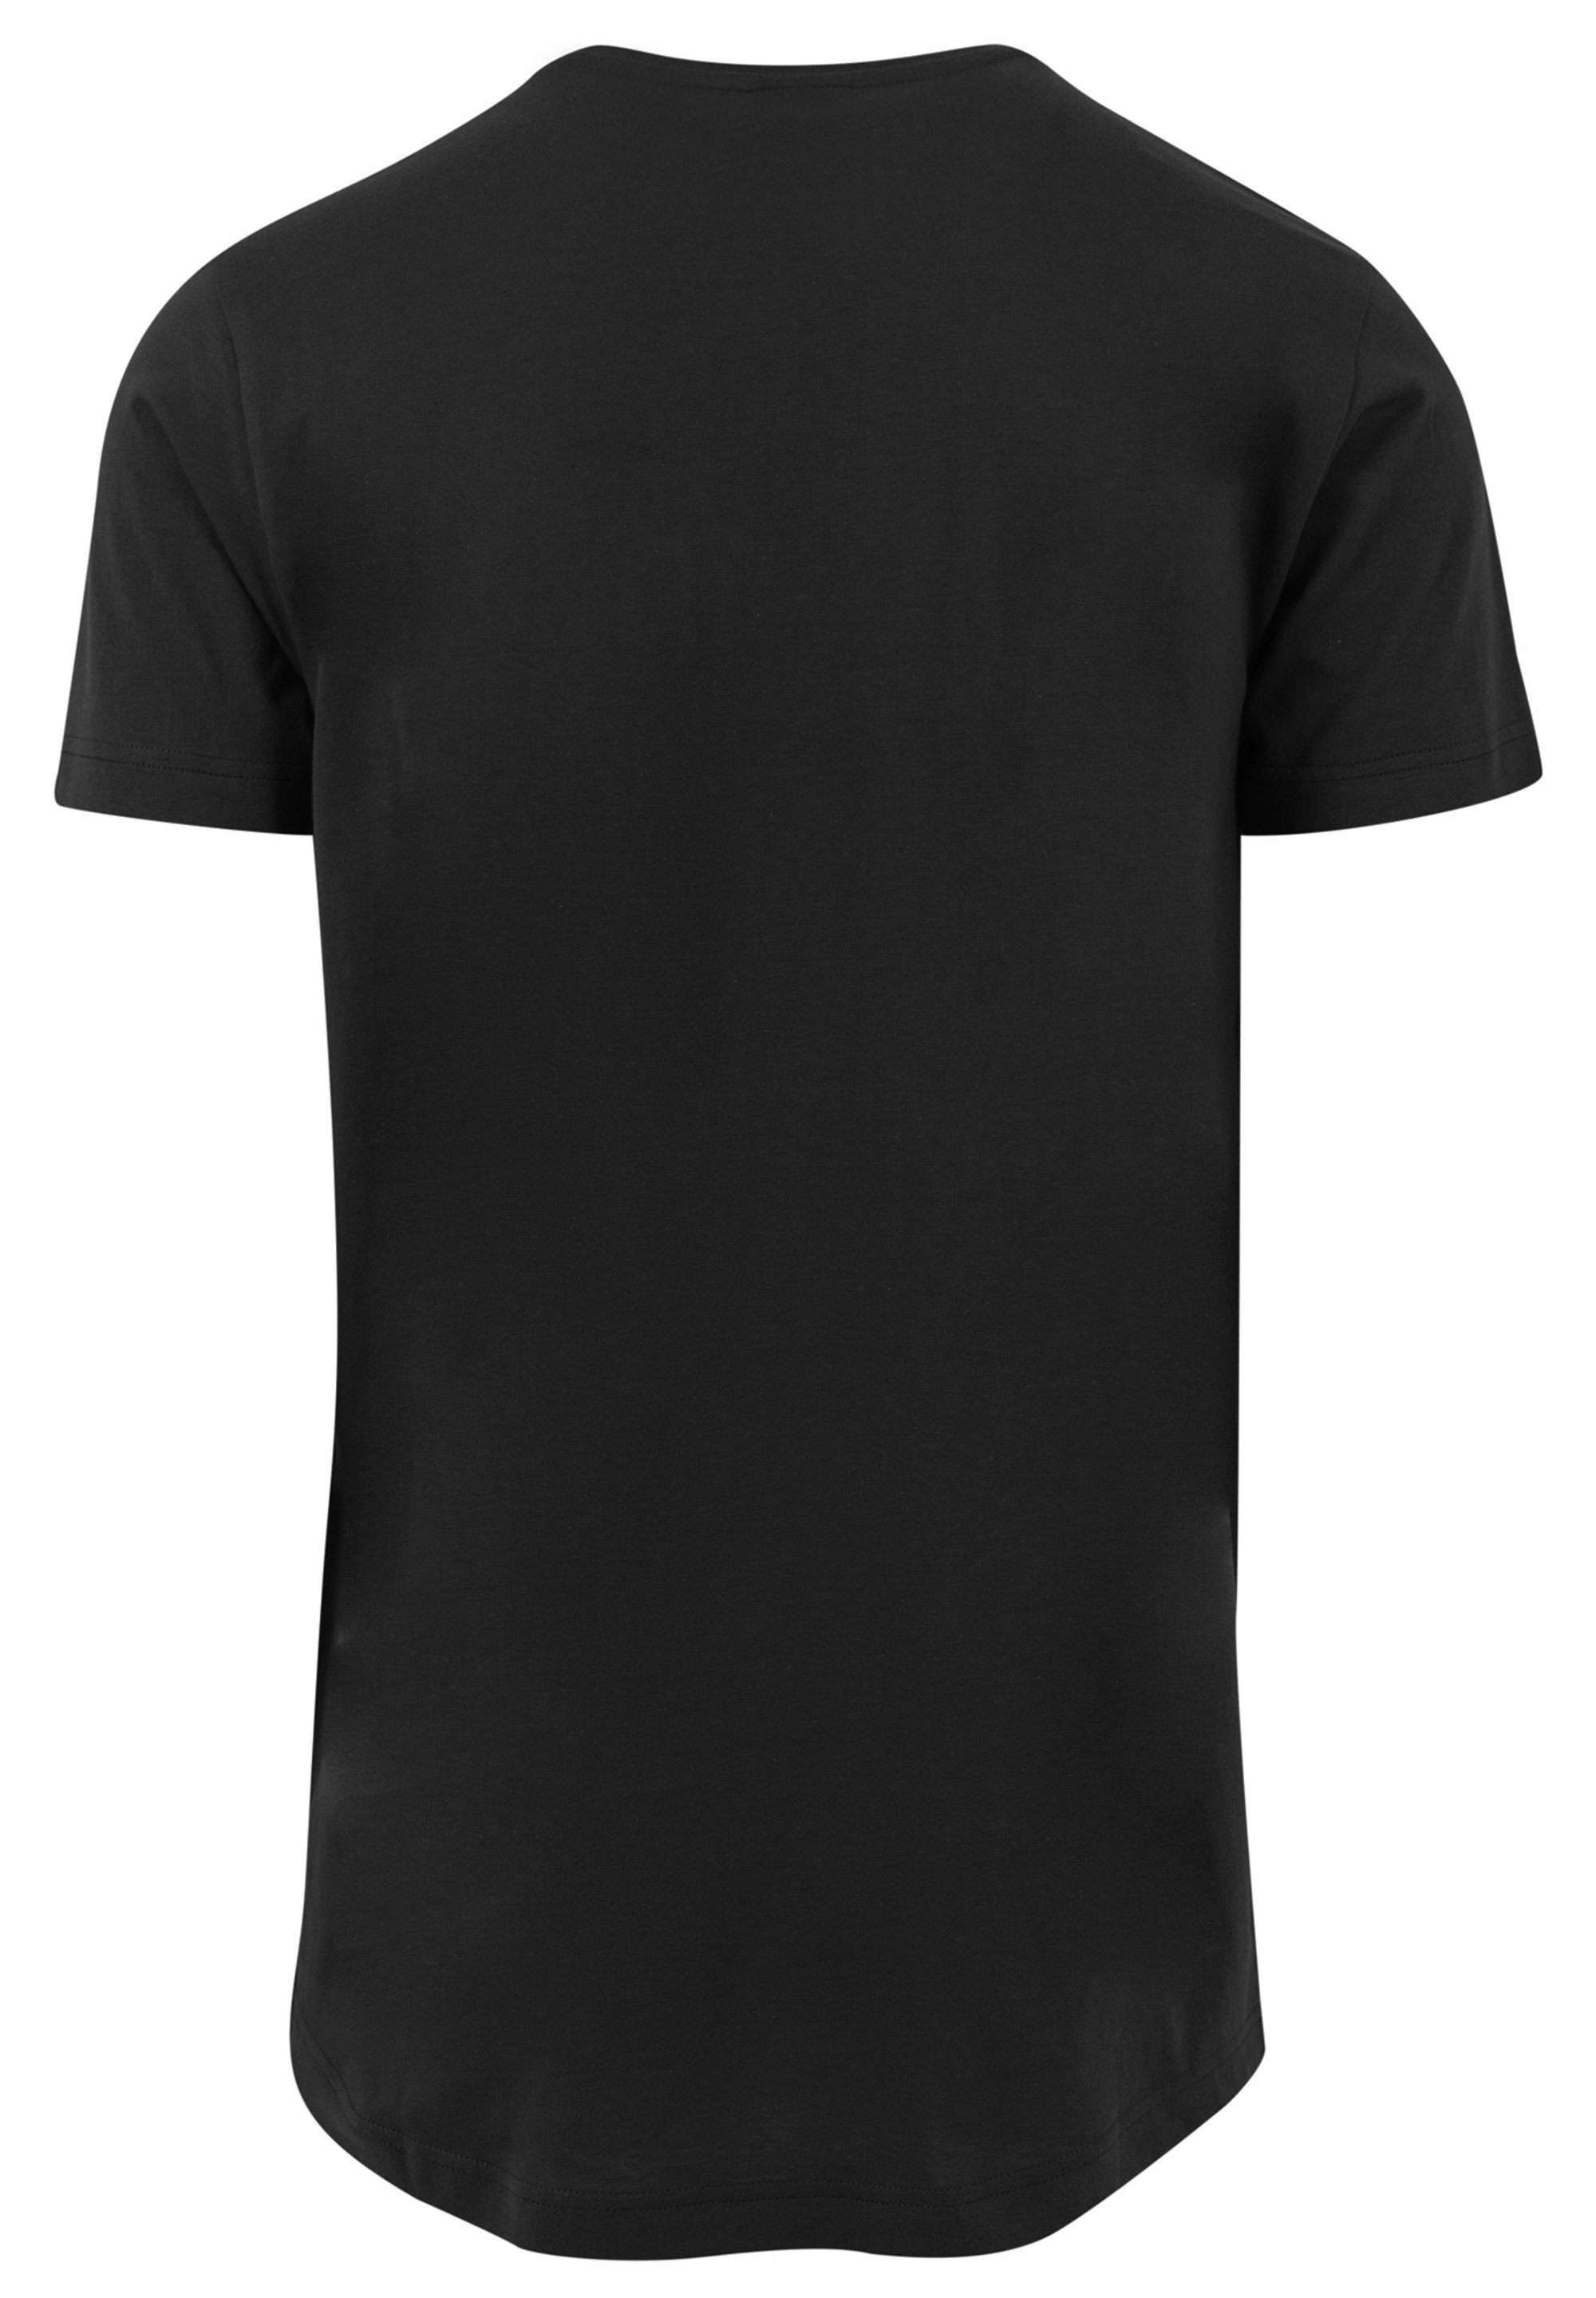 Mandalorian T-Shirt This F4NT4STIC The Is T Wars Way' 'Star Print Long Cut Shirt